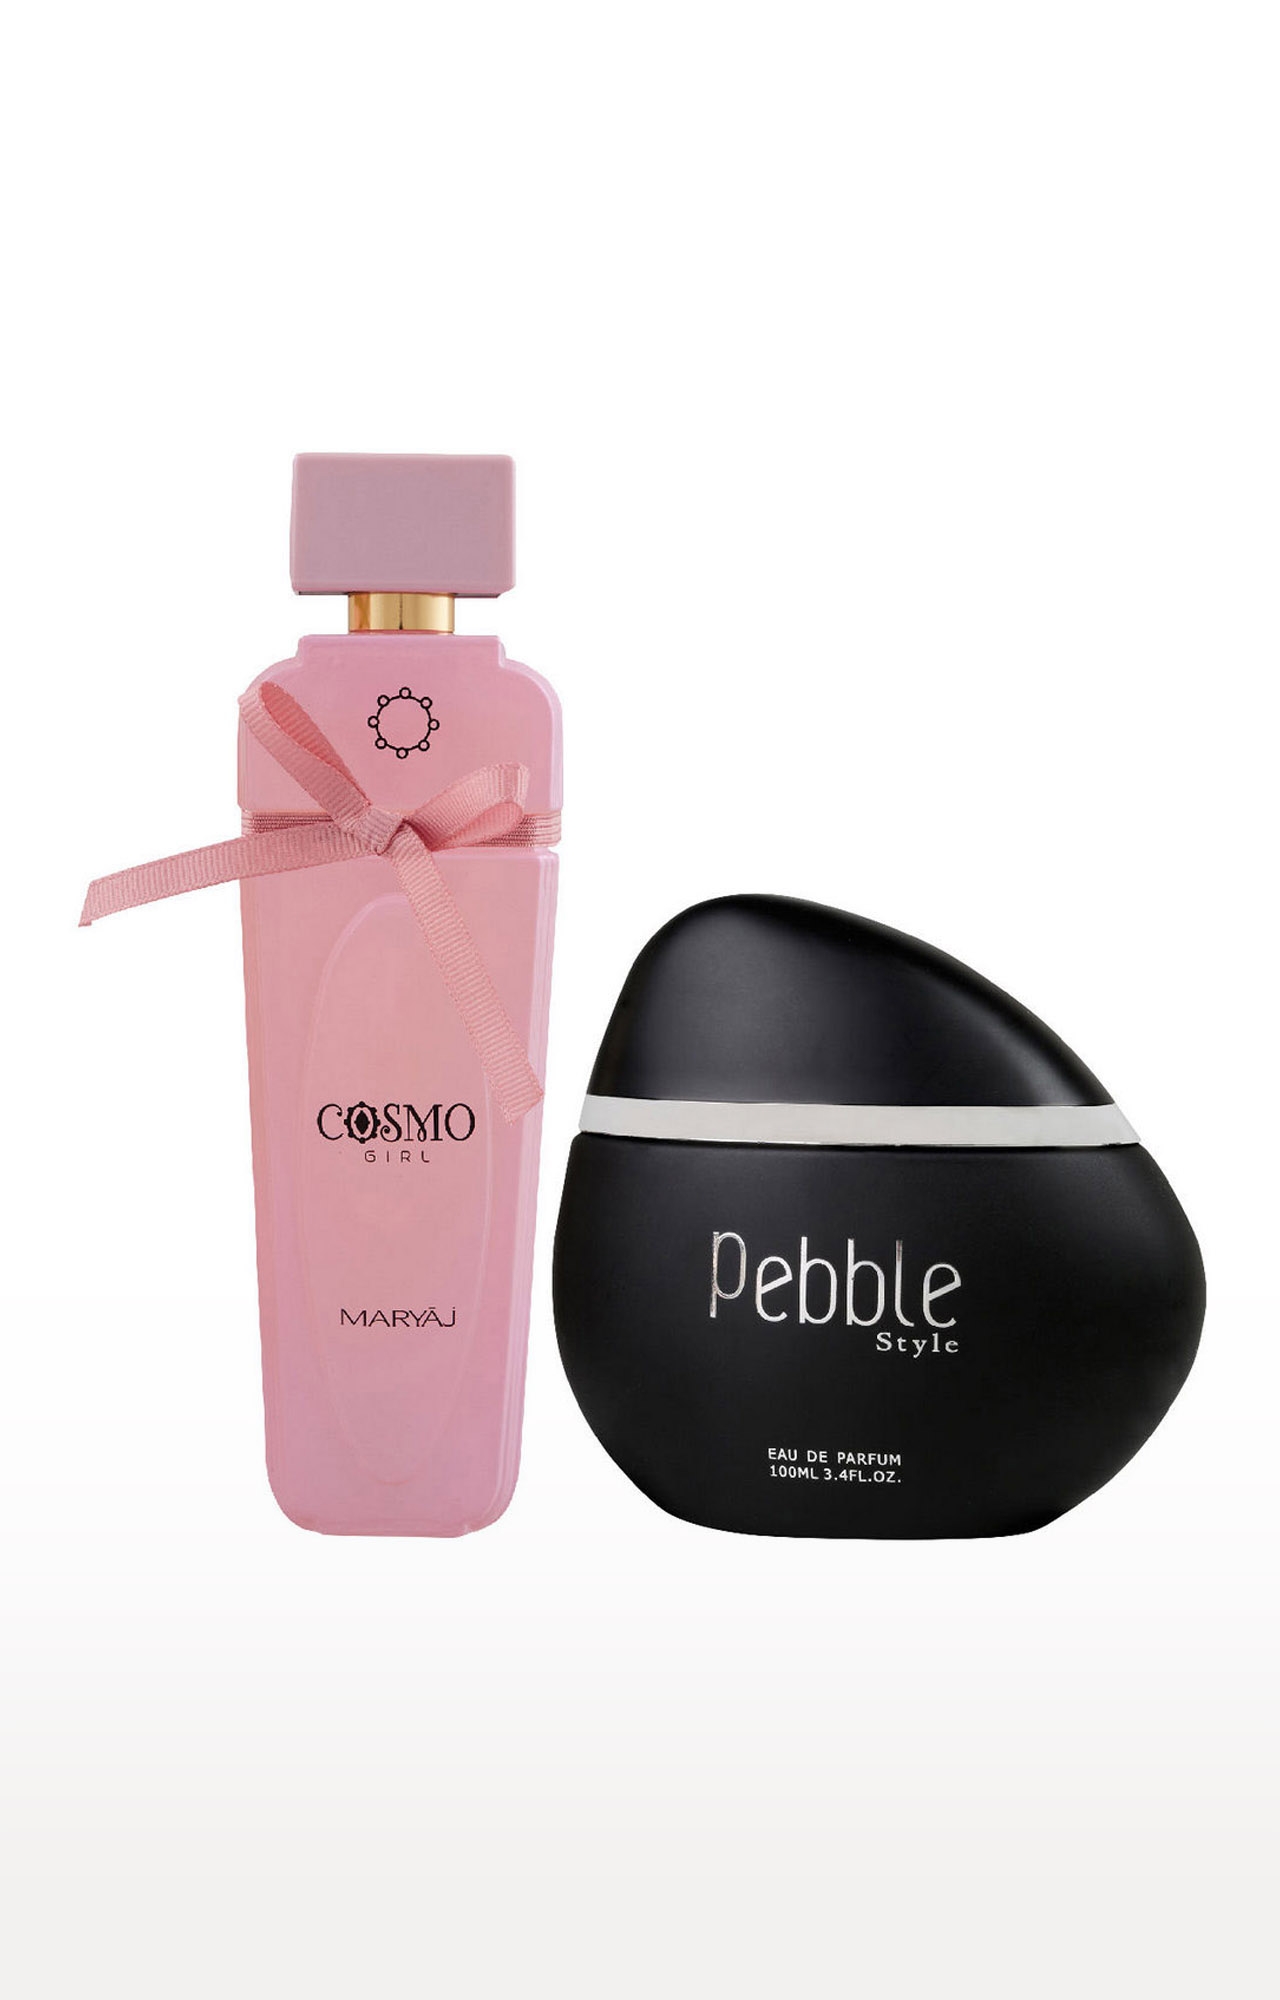 Maryaj Cosmo Girl Eau De Parfum Perfume 100ml for Women and Maryaj Pebble Style Eau De Parfum Perfume 100ml for Men